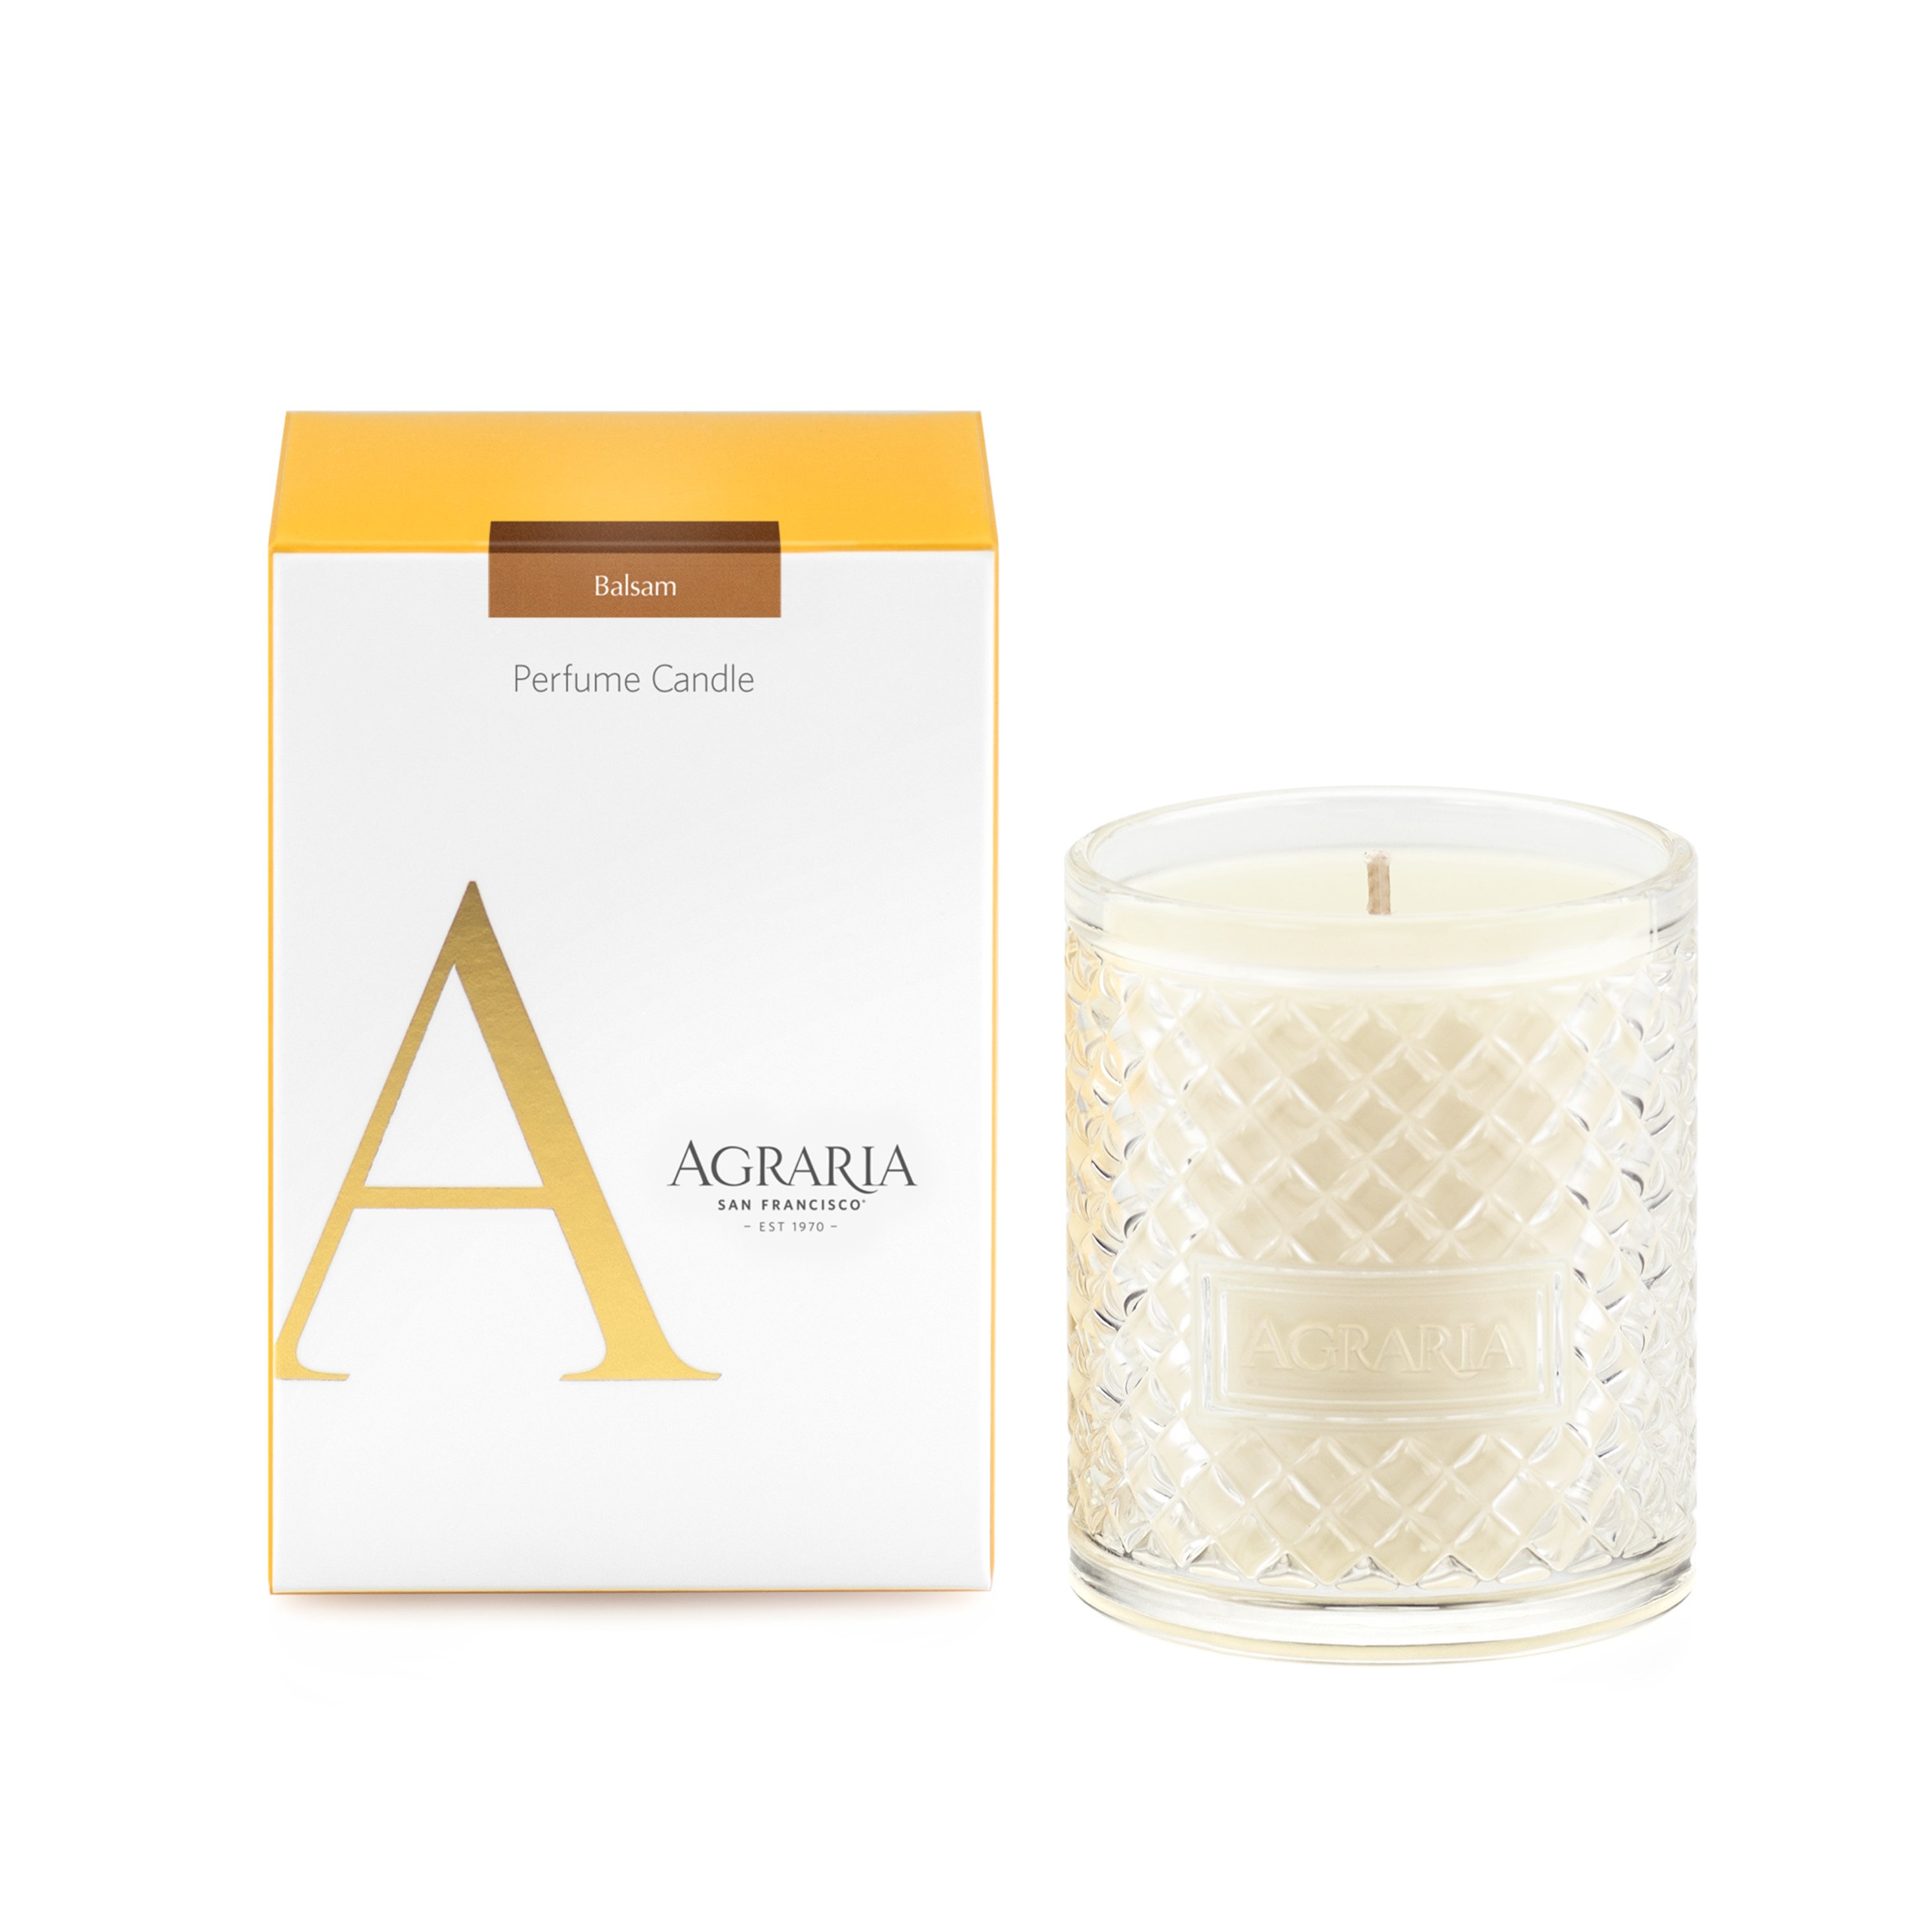 Agraria Balsam Perfume Candle